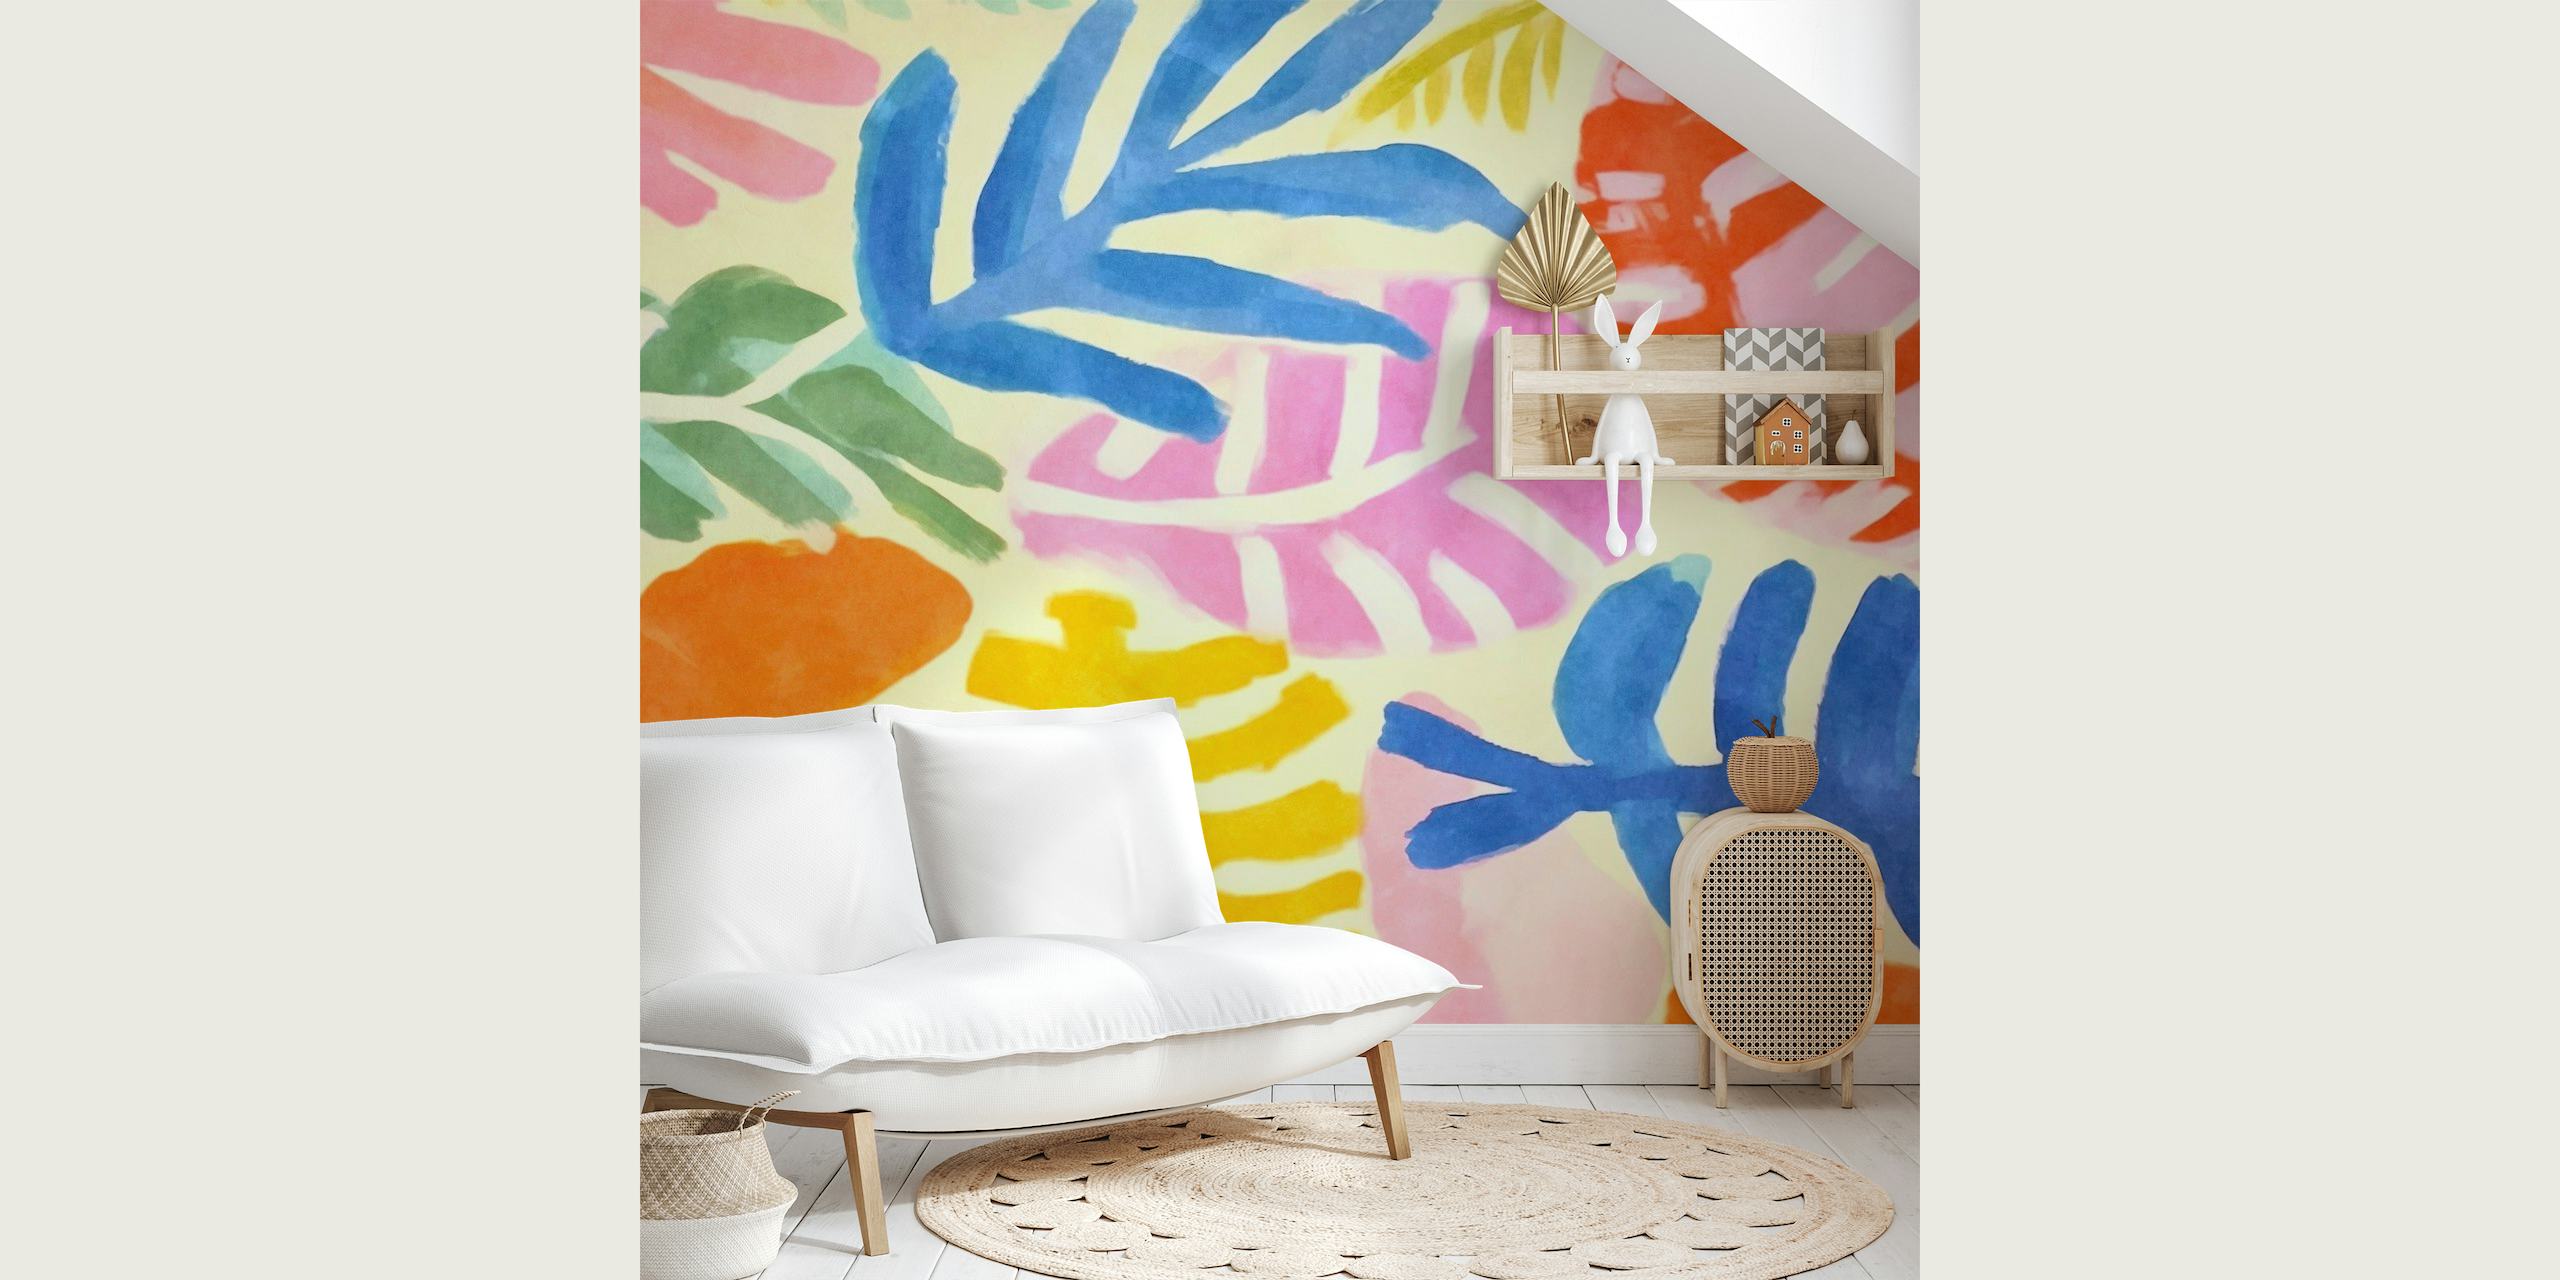 Mural de parede floral abstrato colorido no estilo de Henri Matisse, com desenhos recortados divertidos